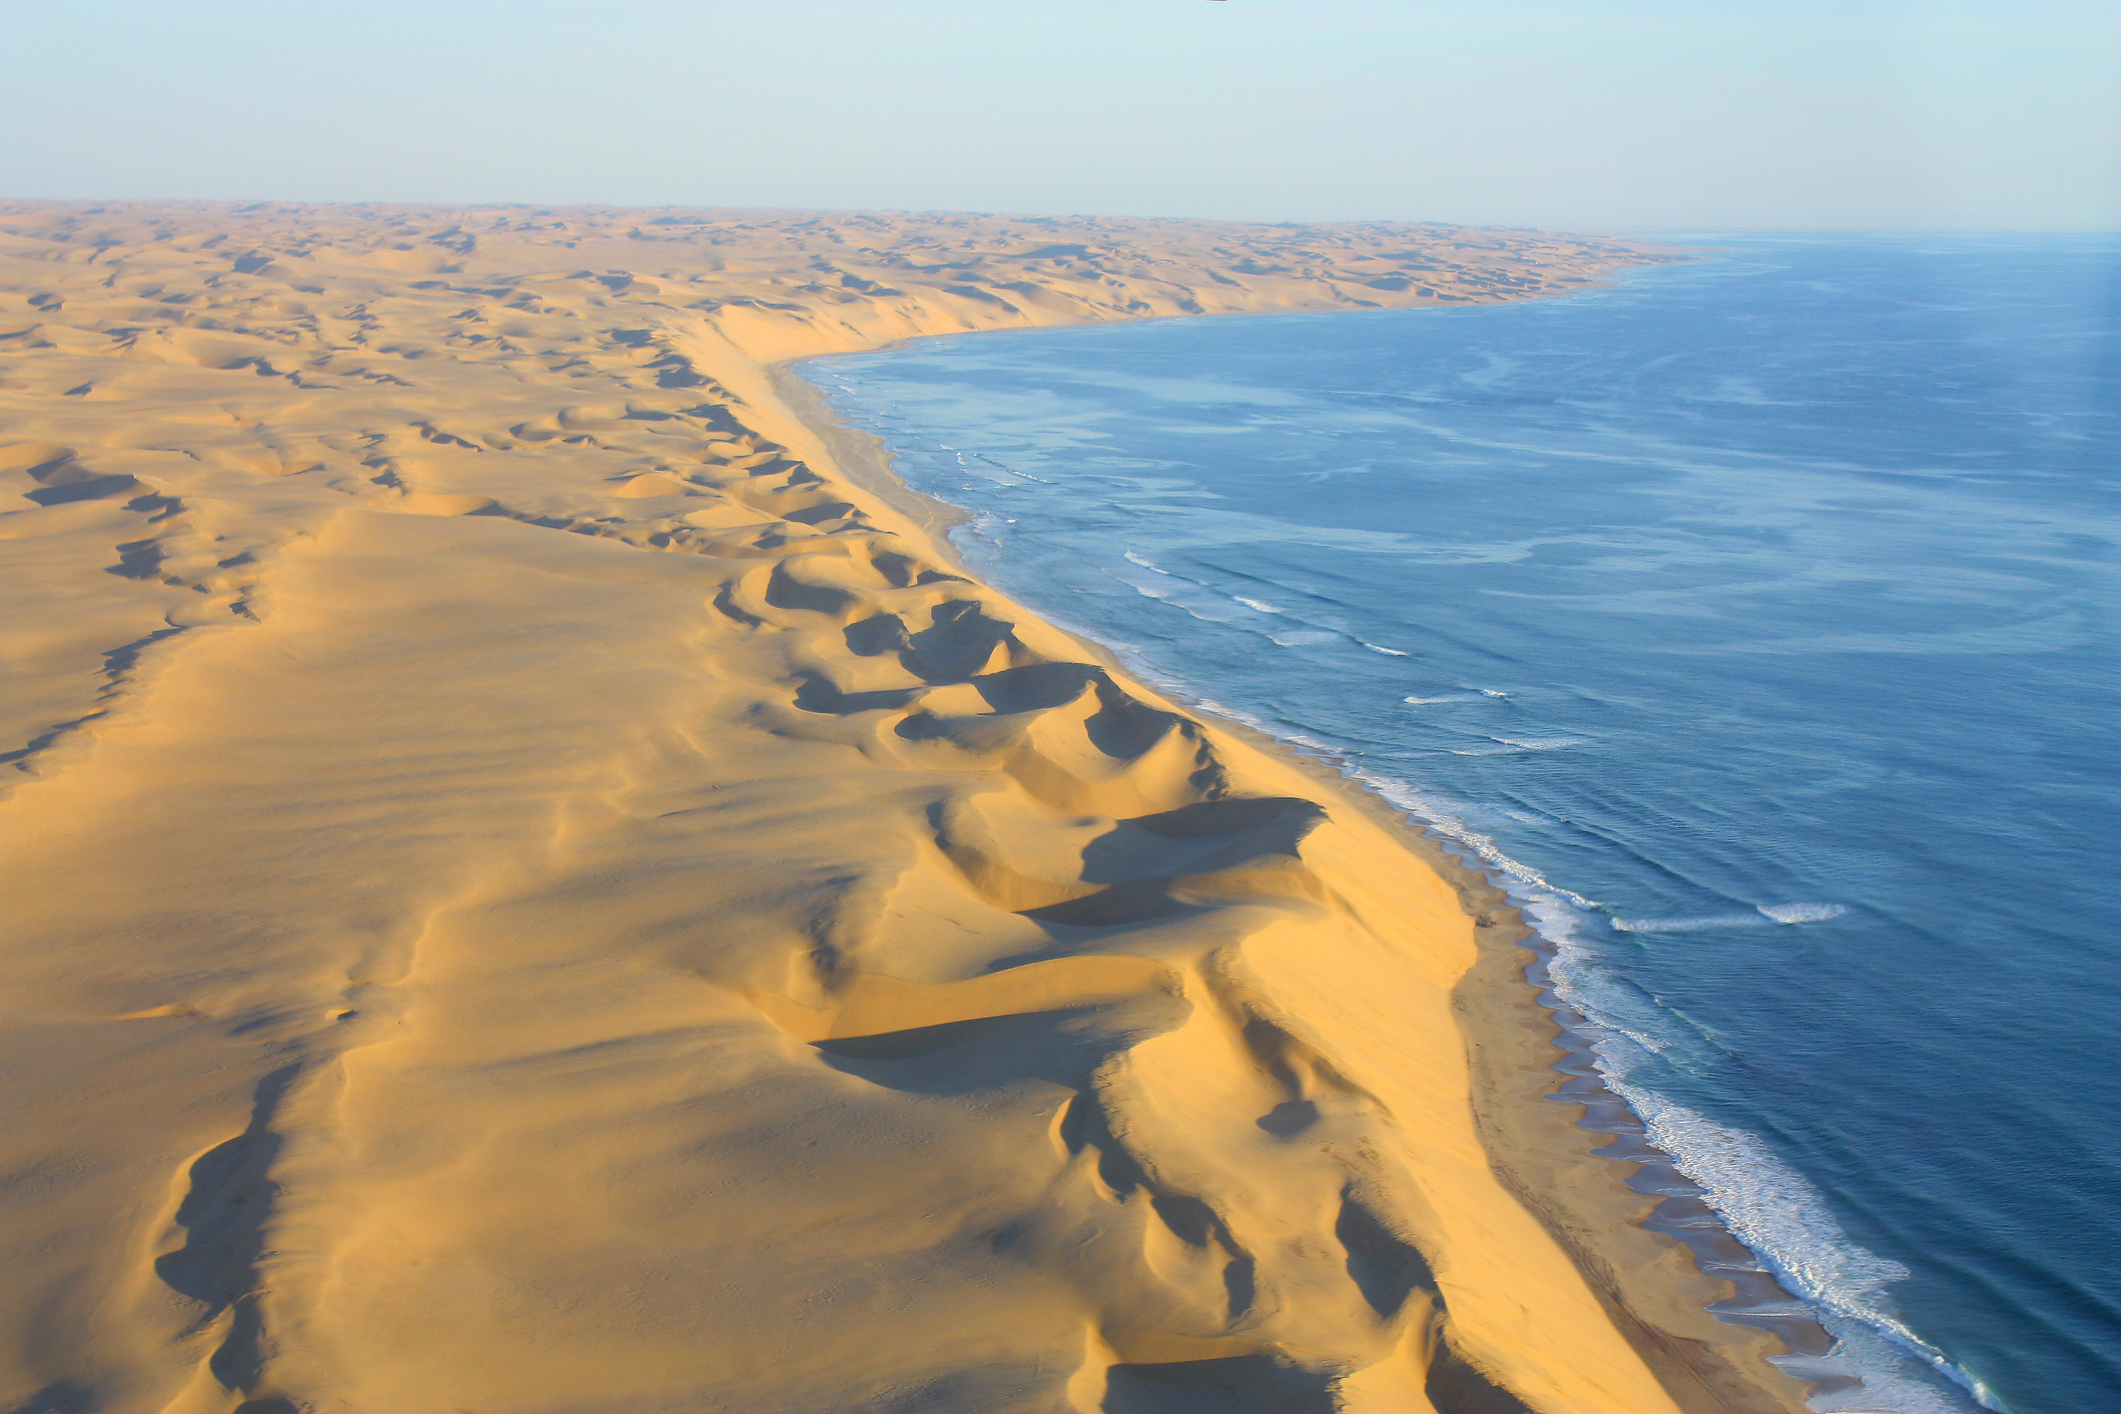 Sanddunes of the Namib Desert meet the Coastline of the Ocean